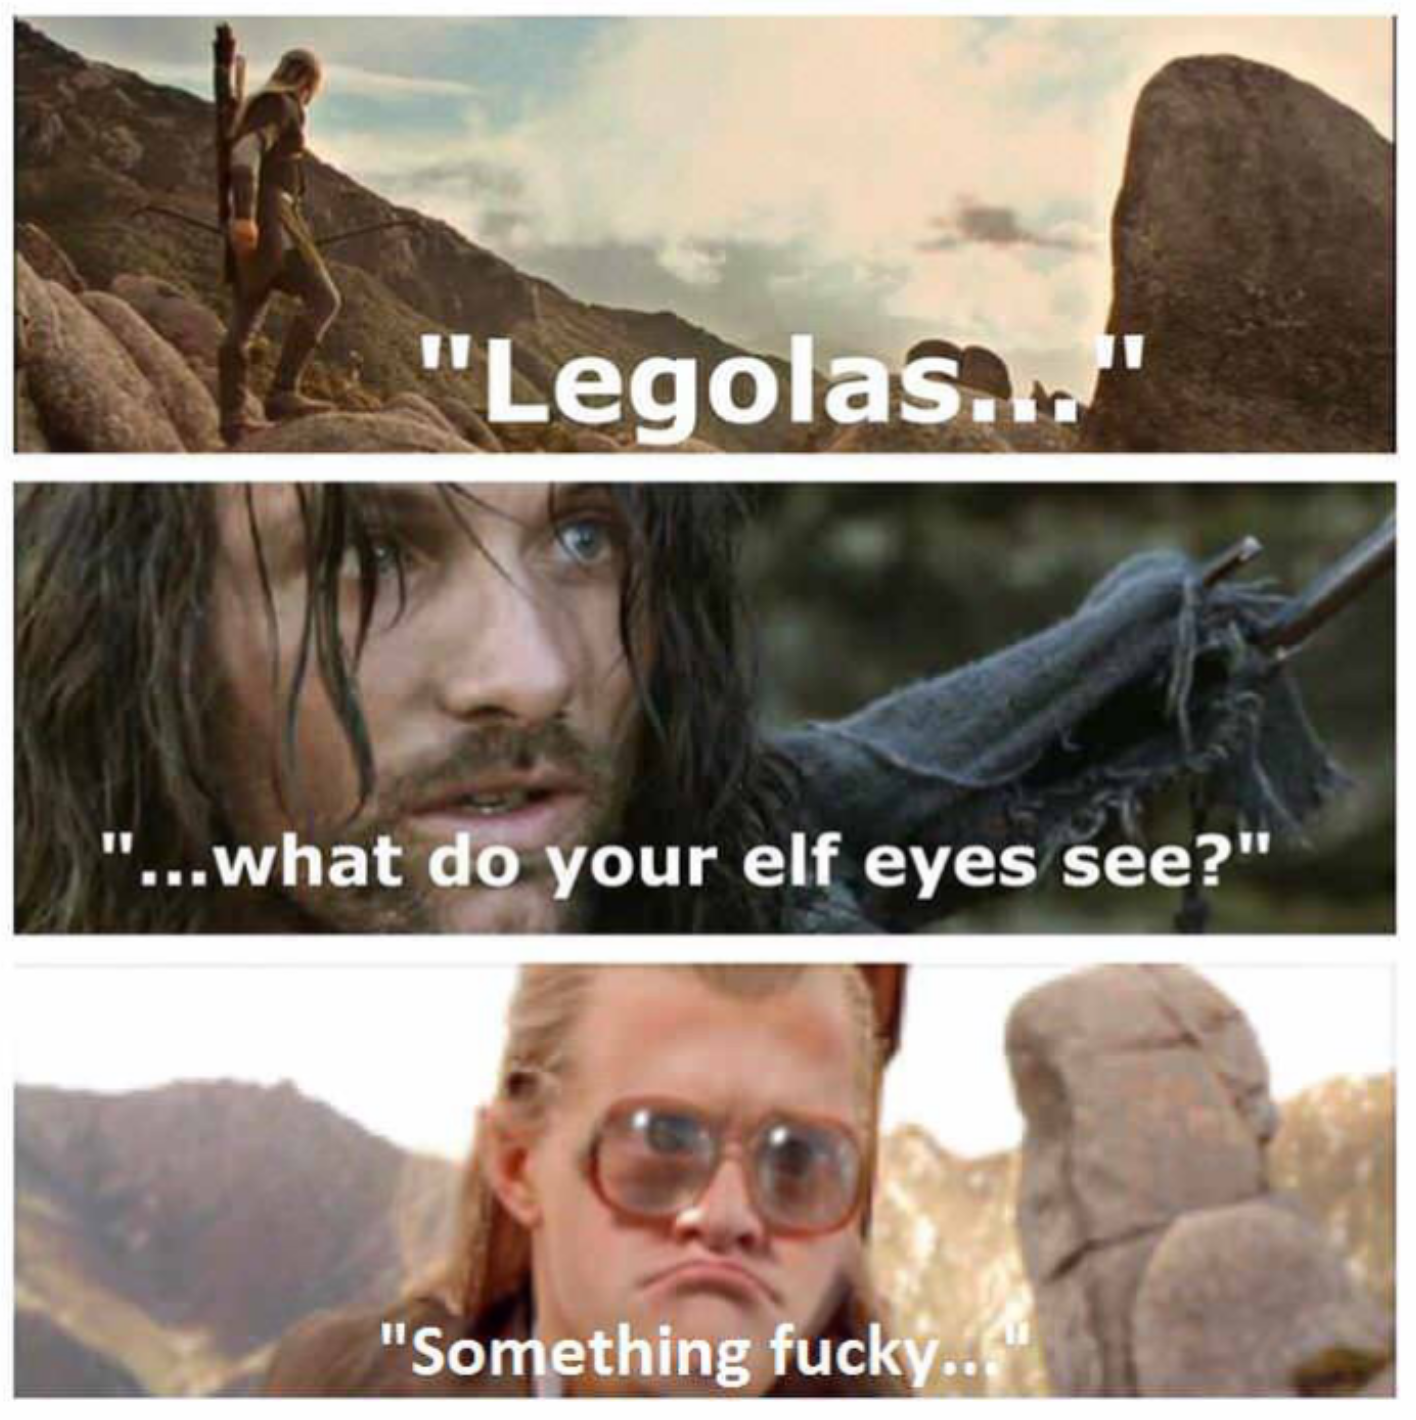 legolas what do your elf eyes see meme - "Legolas..." "...what do your elf eyes see?" "Something fucky..